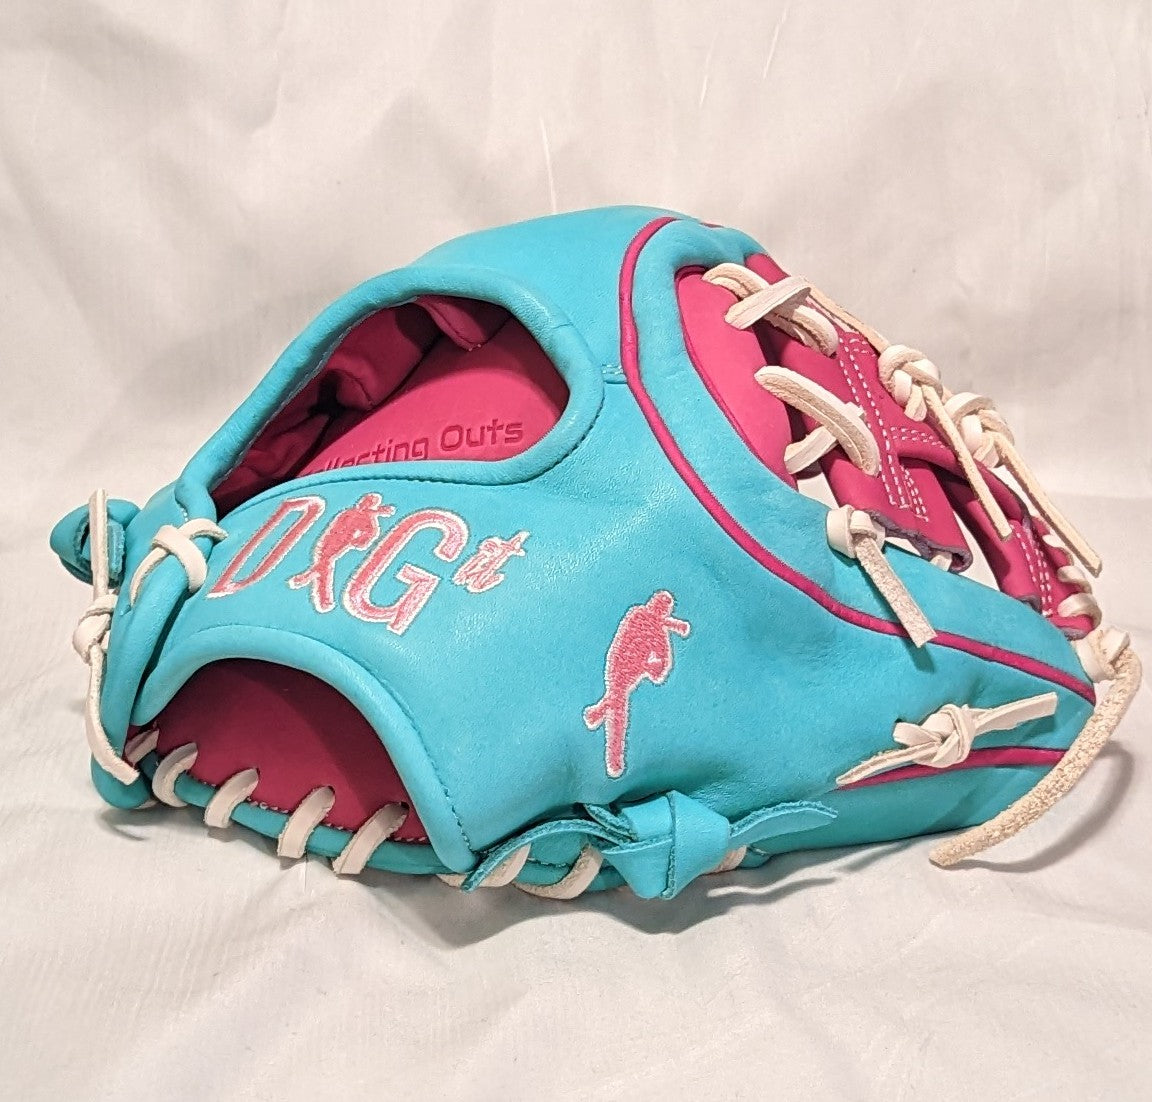 Moore Catholic Baseball Glove – DRG Sports